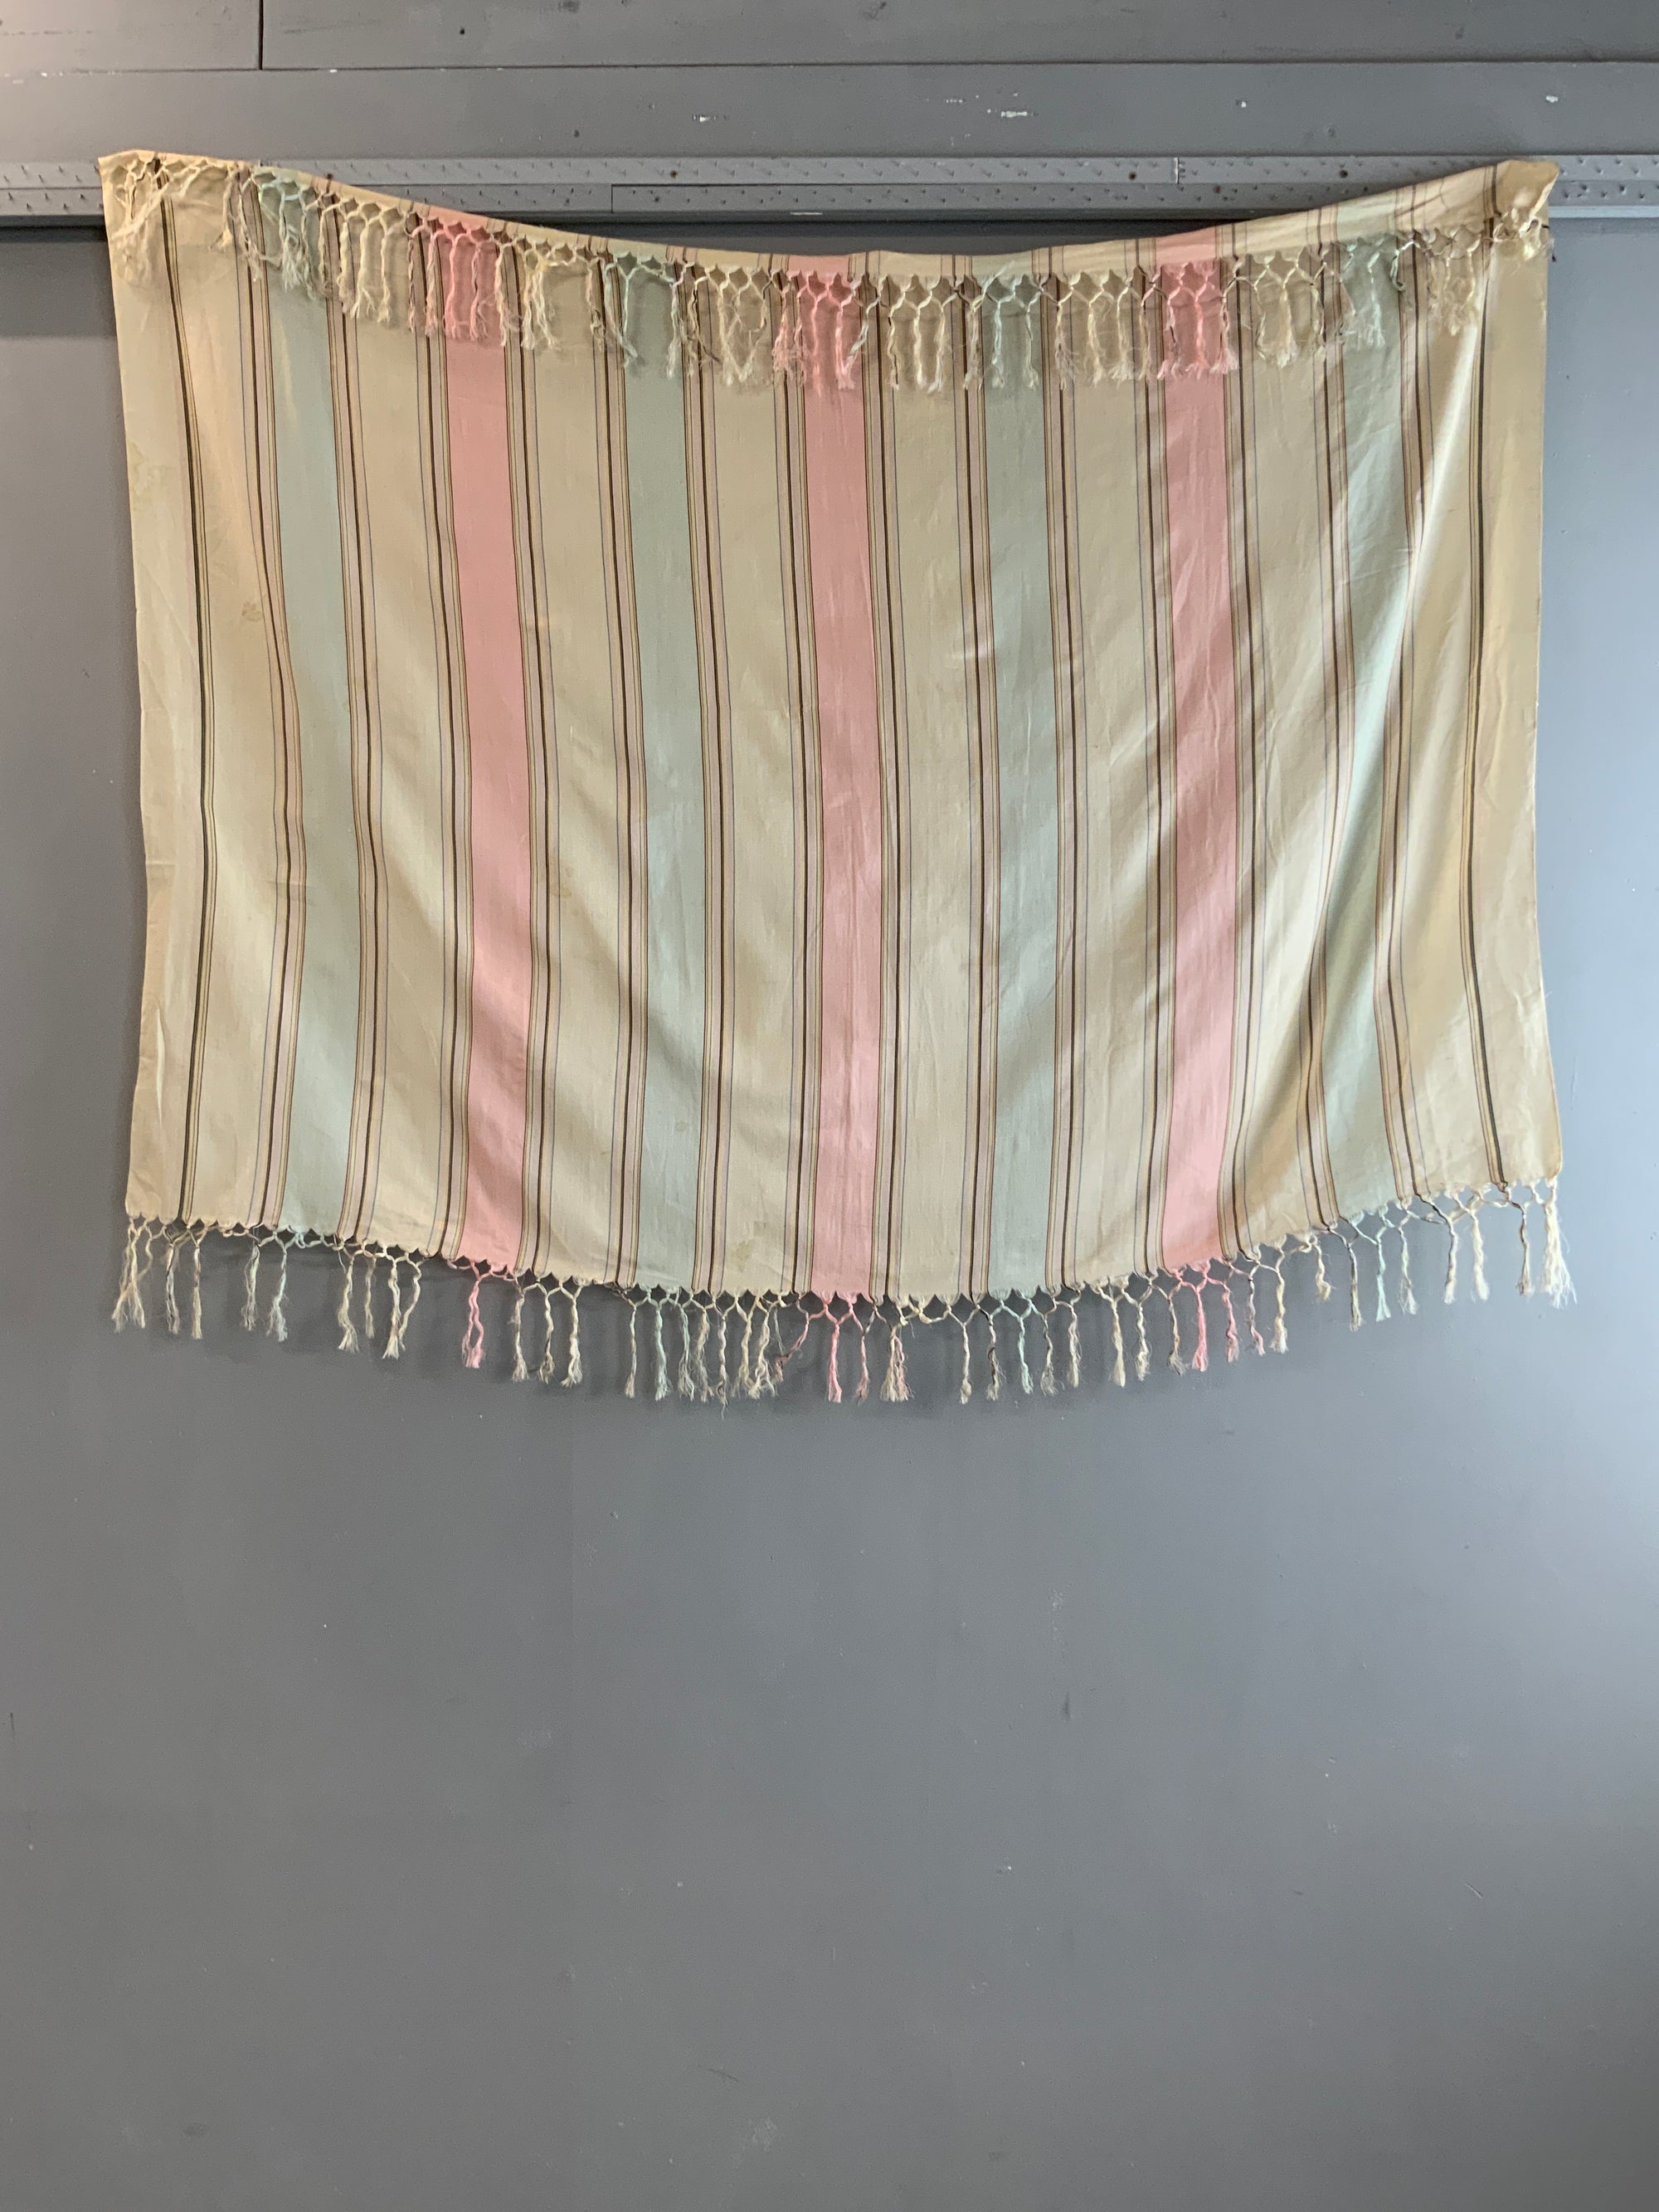 Late Victorian plain candy striped shawl (152 x 113cm)